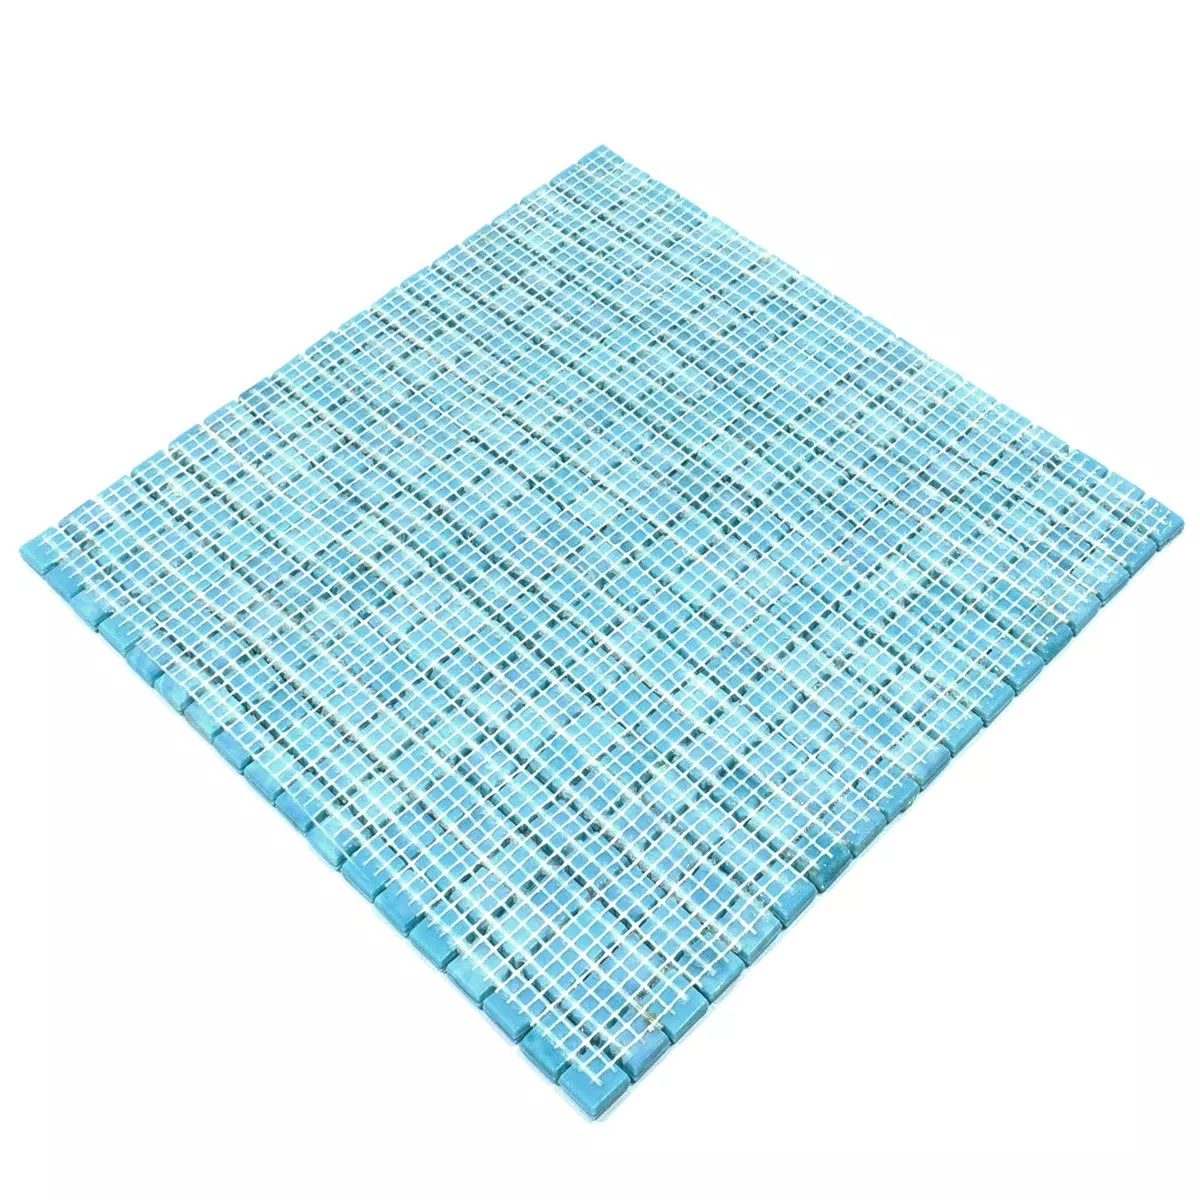 Padrão de Mosaico De Vidro Azulejos Seaside Turquesa